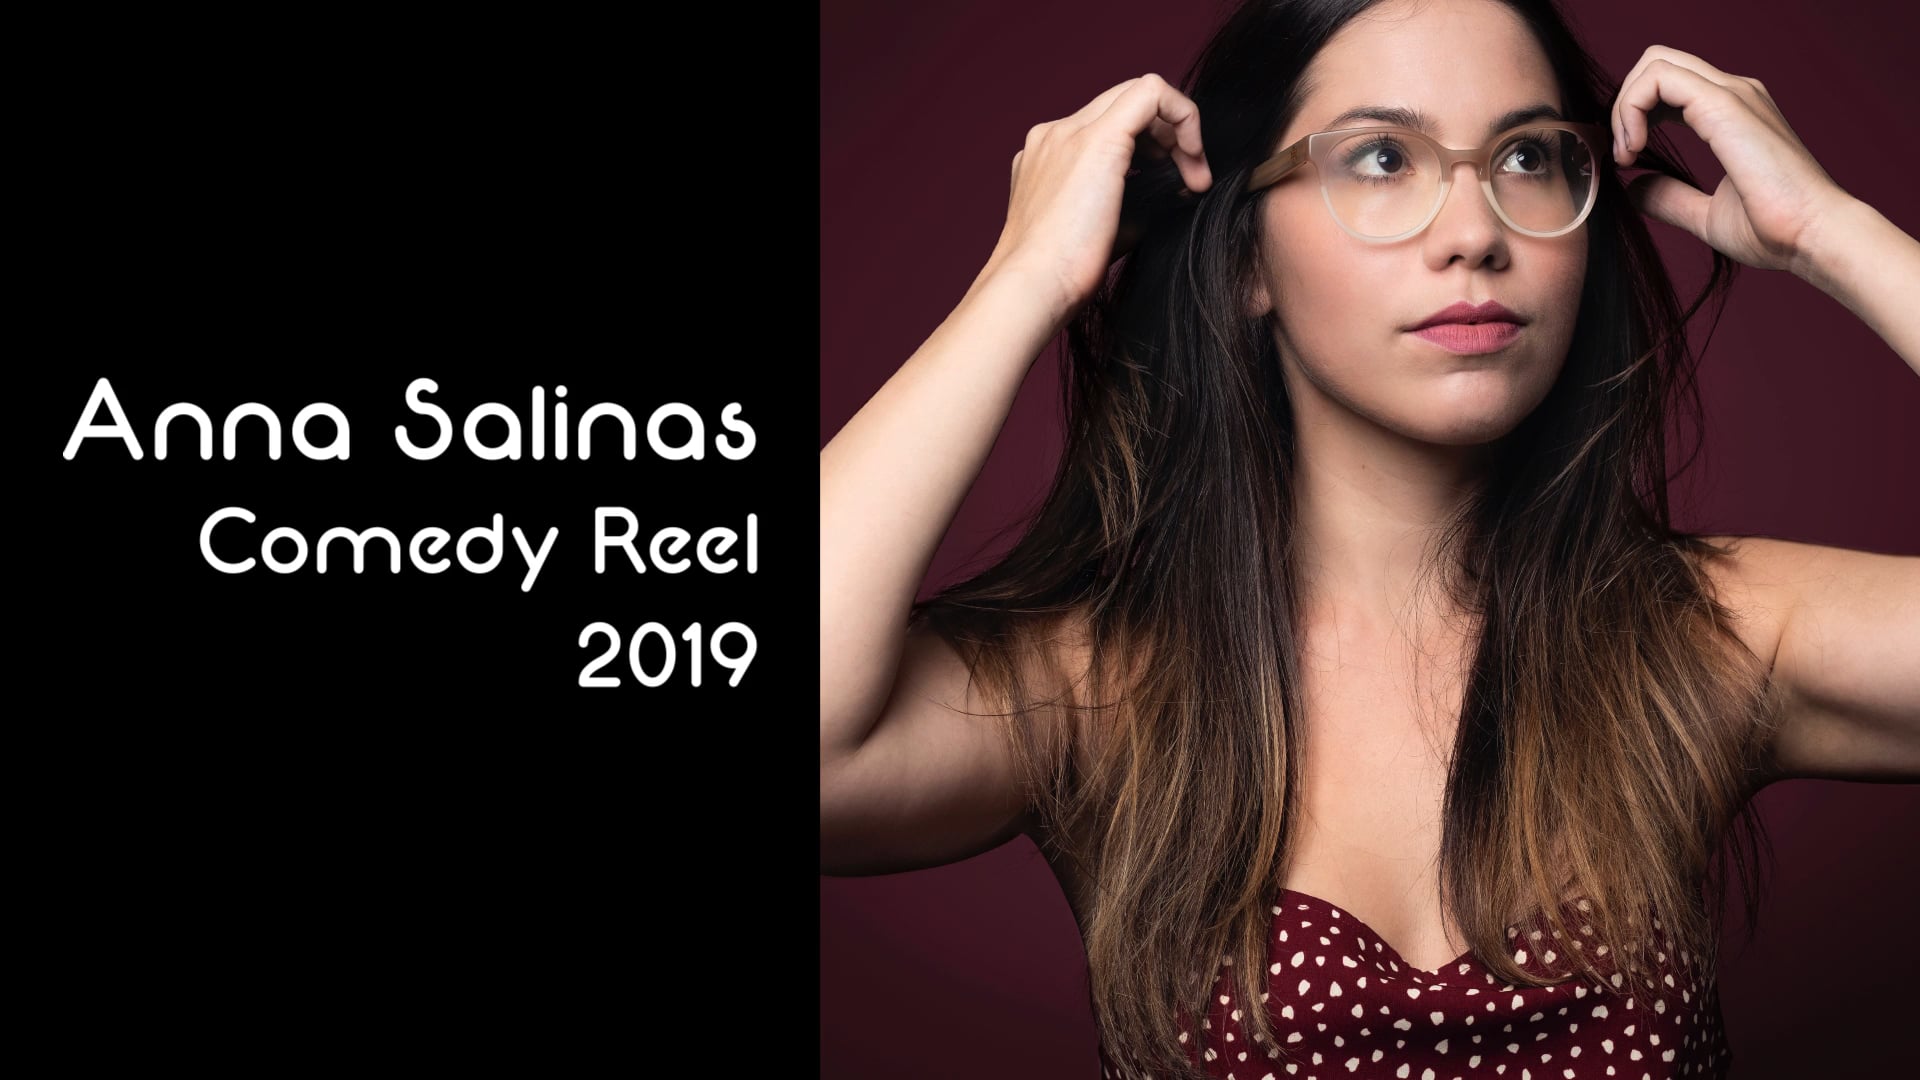 Comedy Reel 2019: Anna Salinas